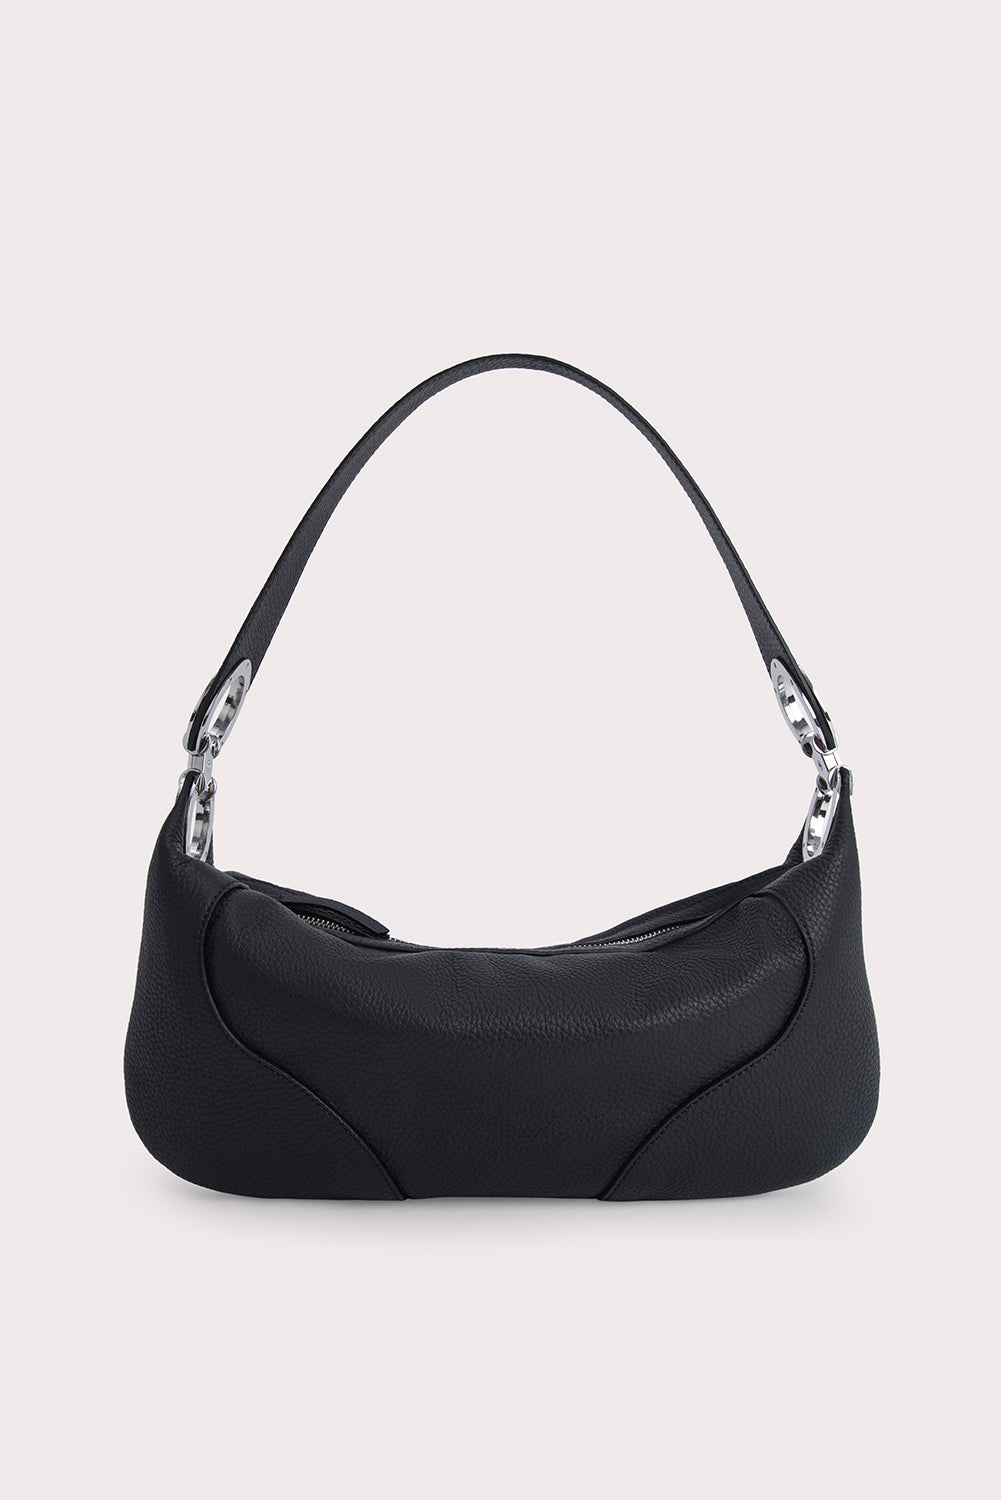 BY FAR Mini Amira Grain Leather Shoulder Bag in Black